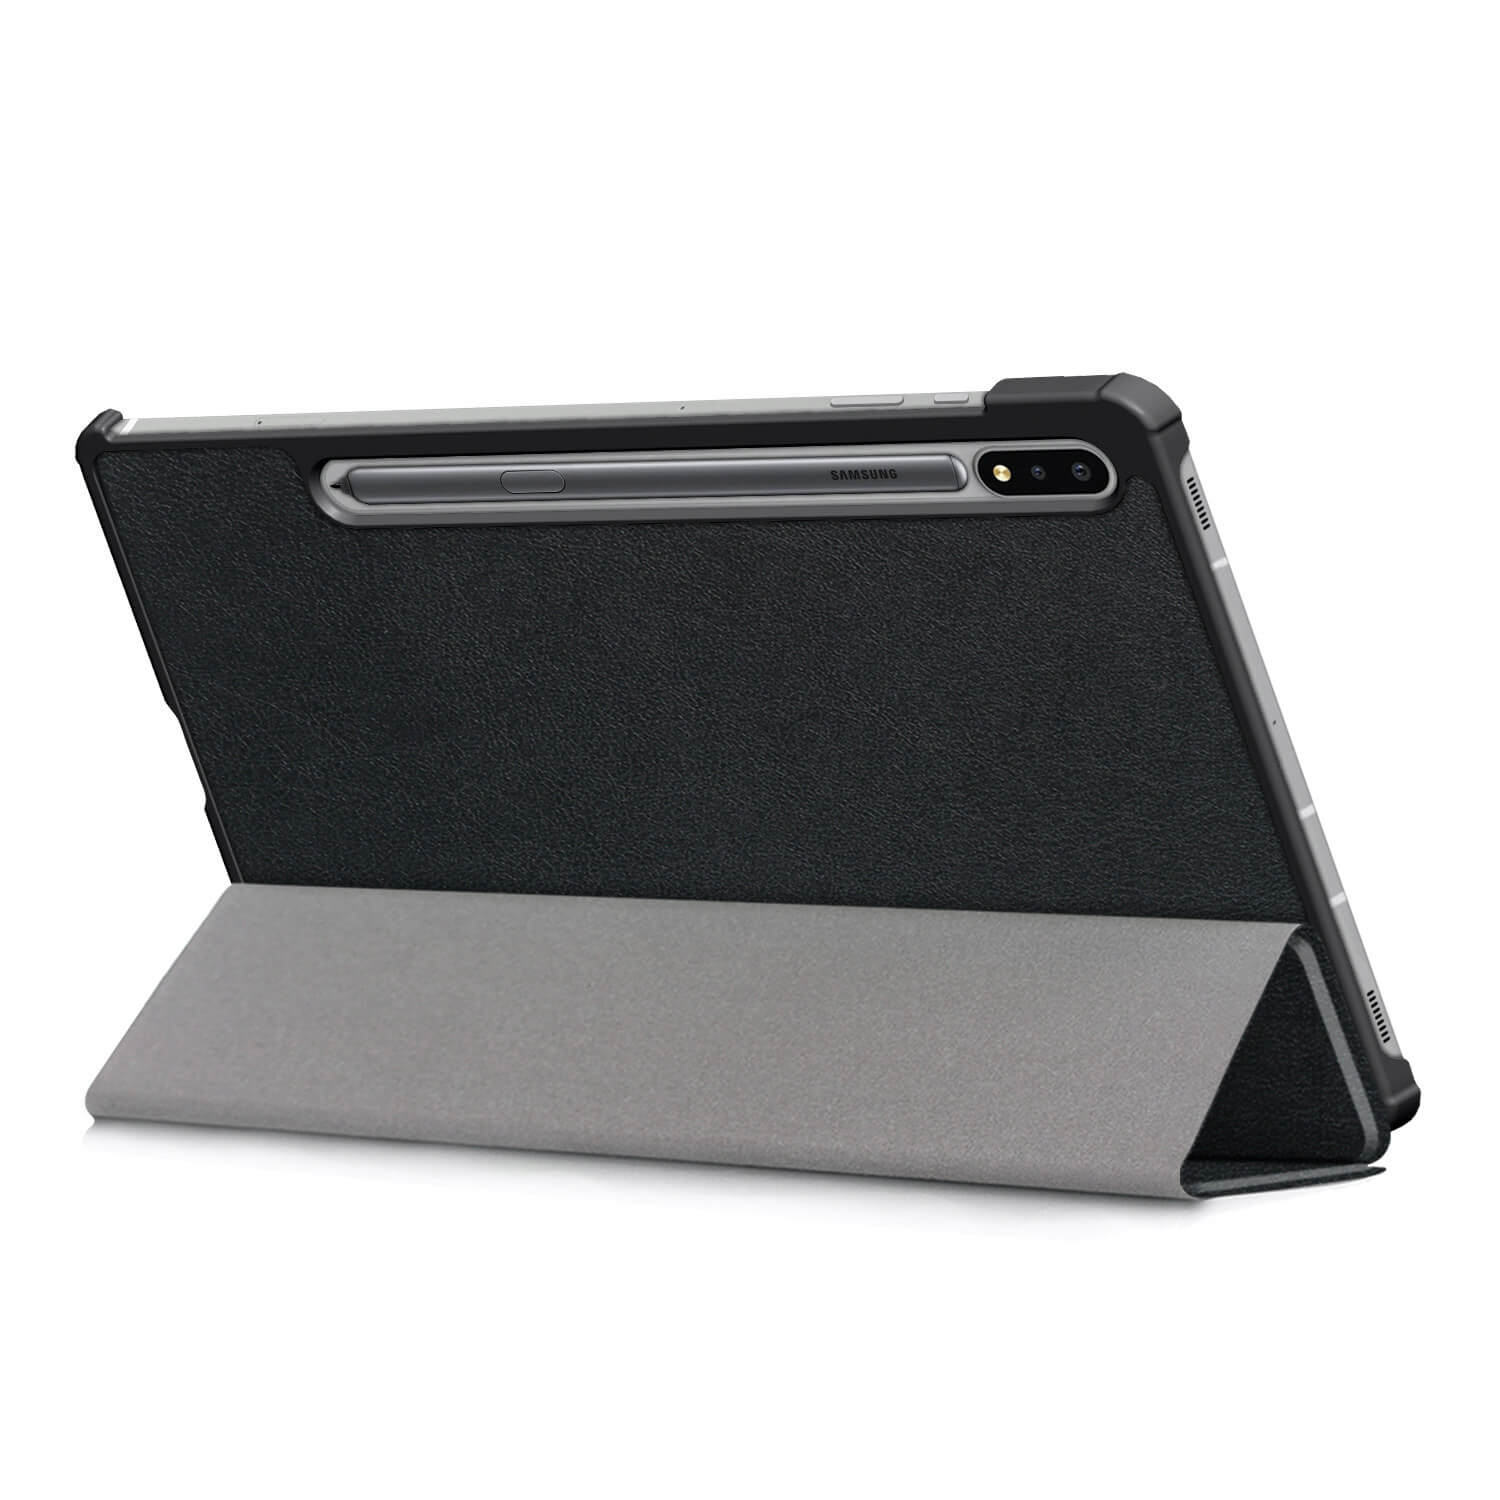 Tough on Samsung Galaxy Tab S7+ Case Smart Cover Black